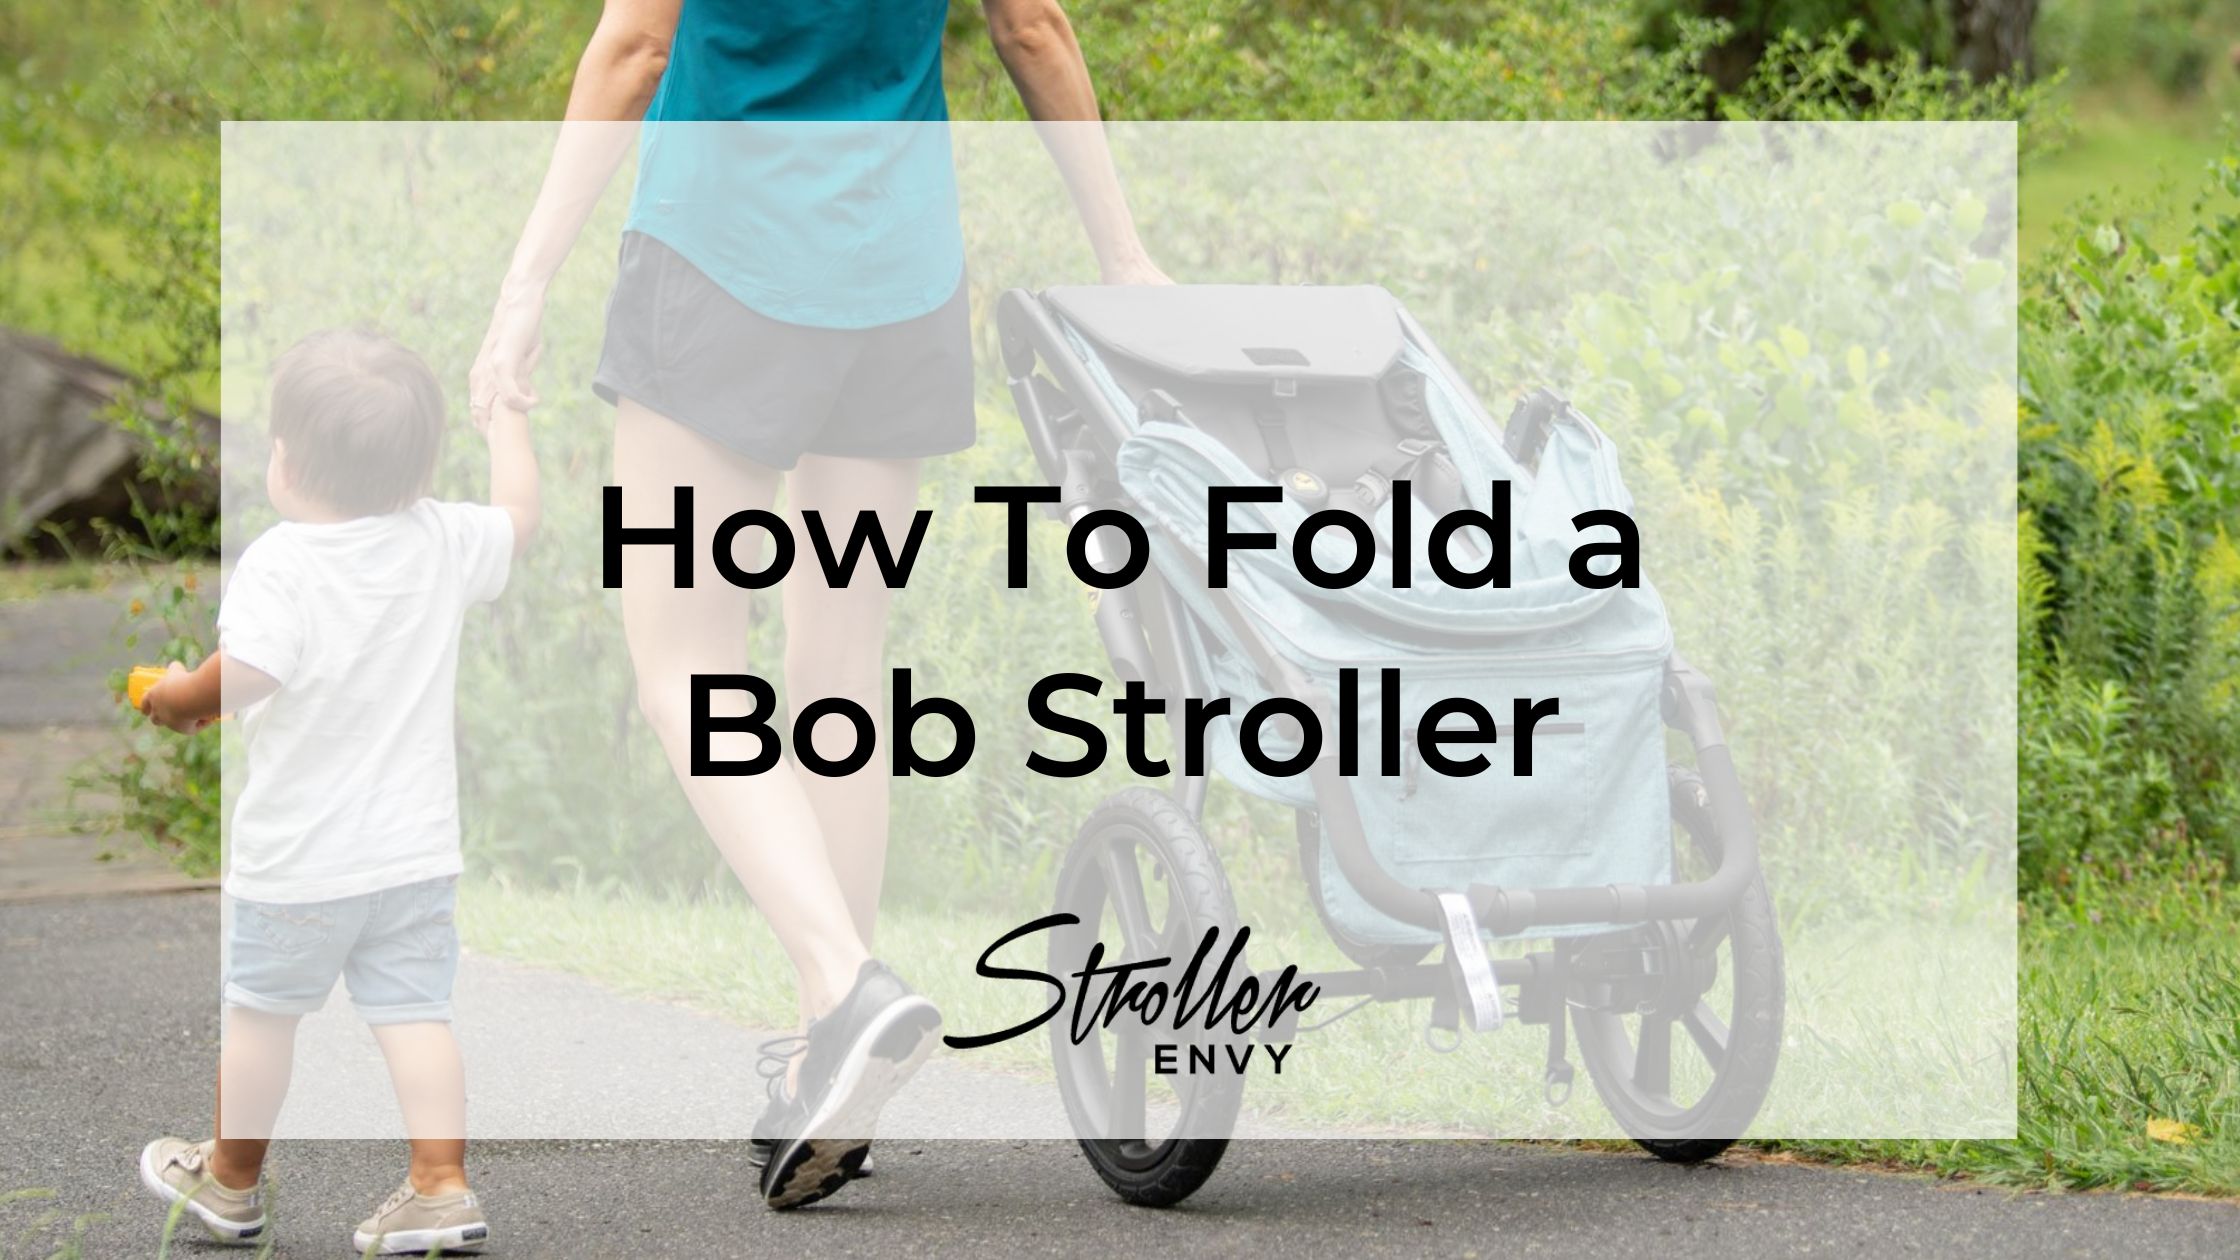 How To Fold a Bob Stroller